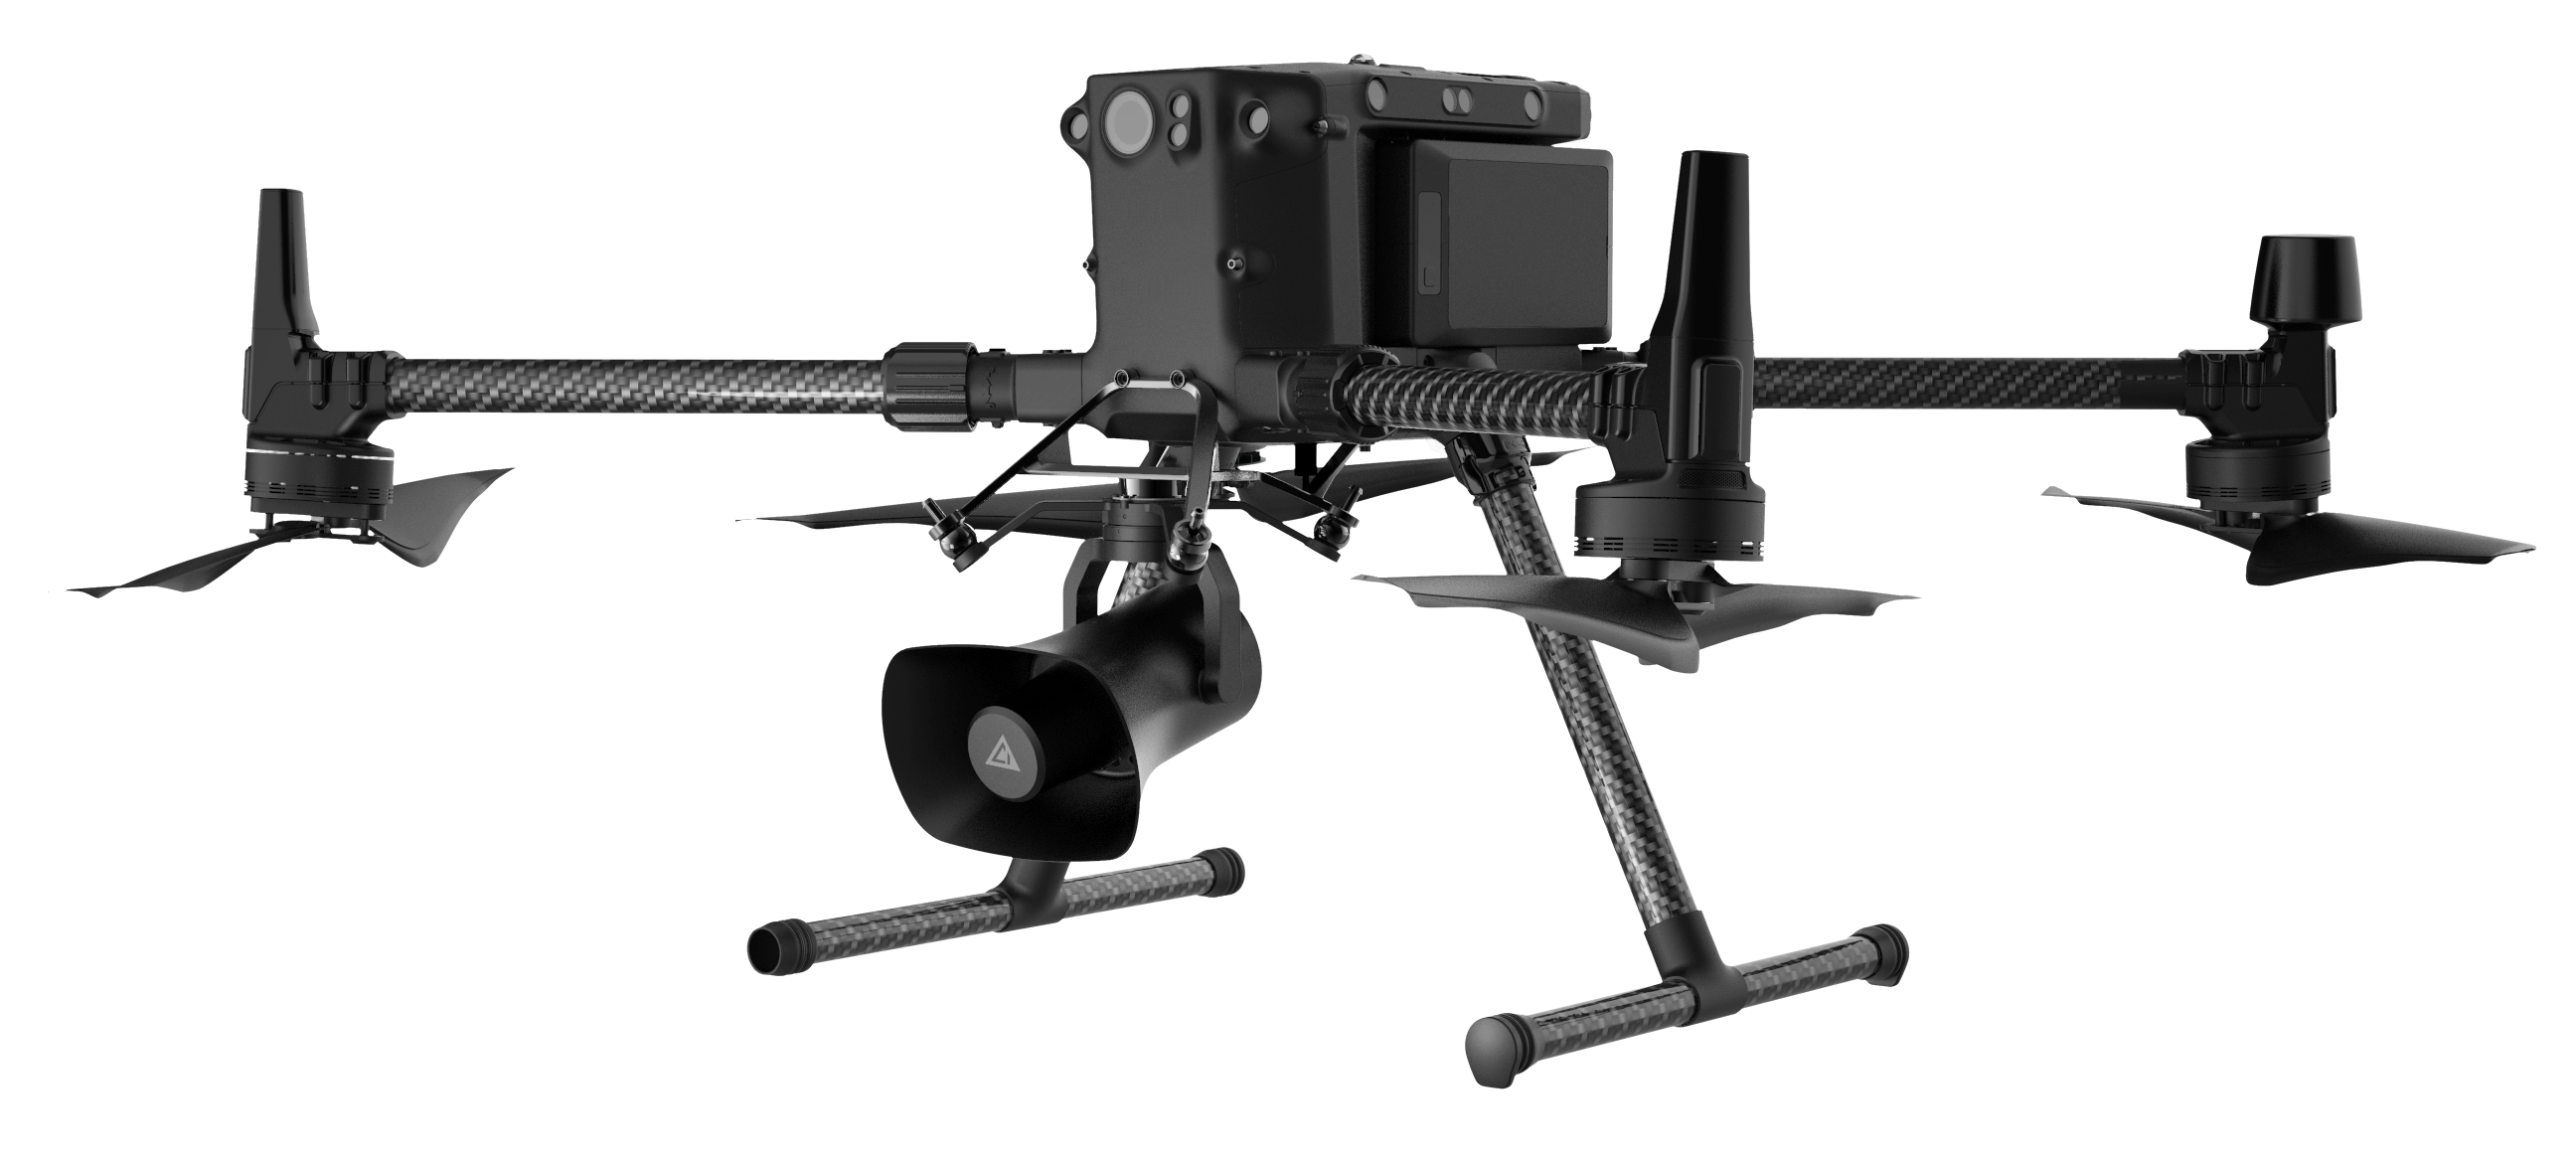 MP130S - Drone Speaker